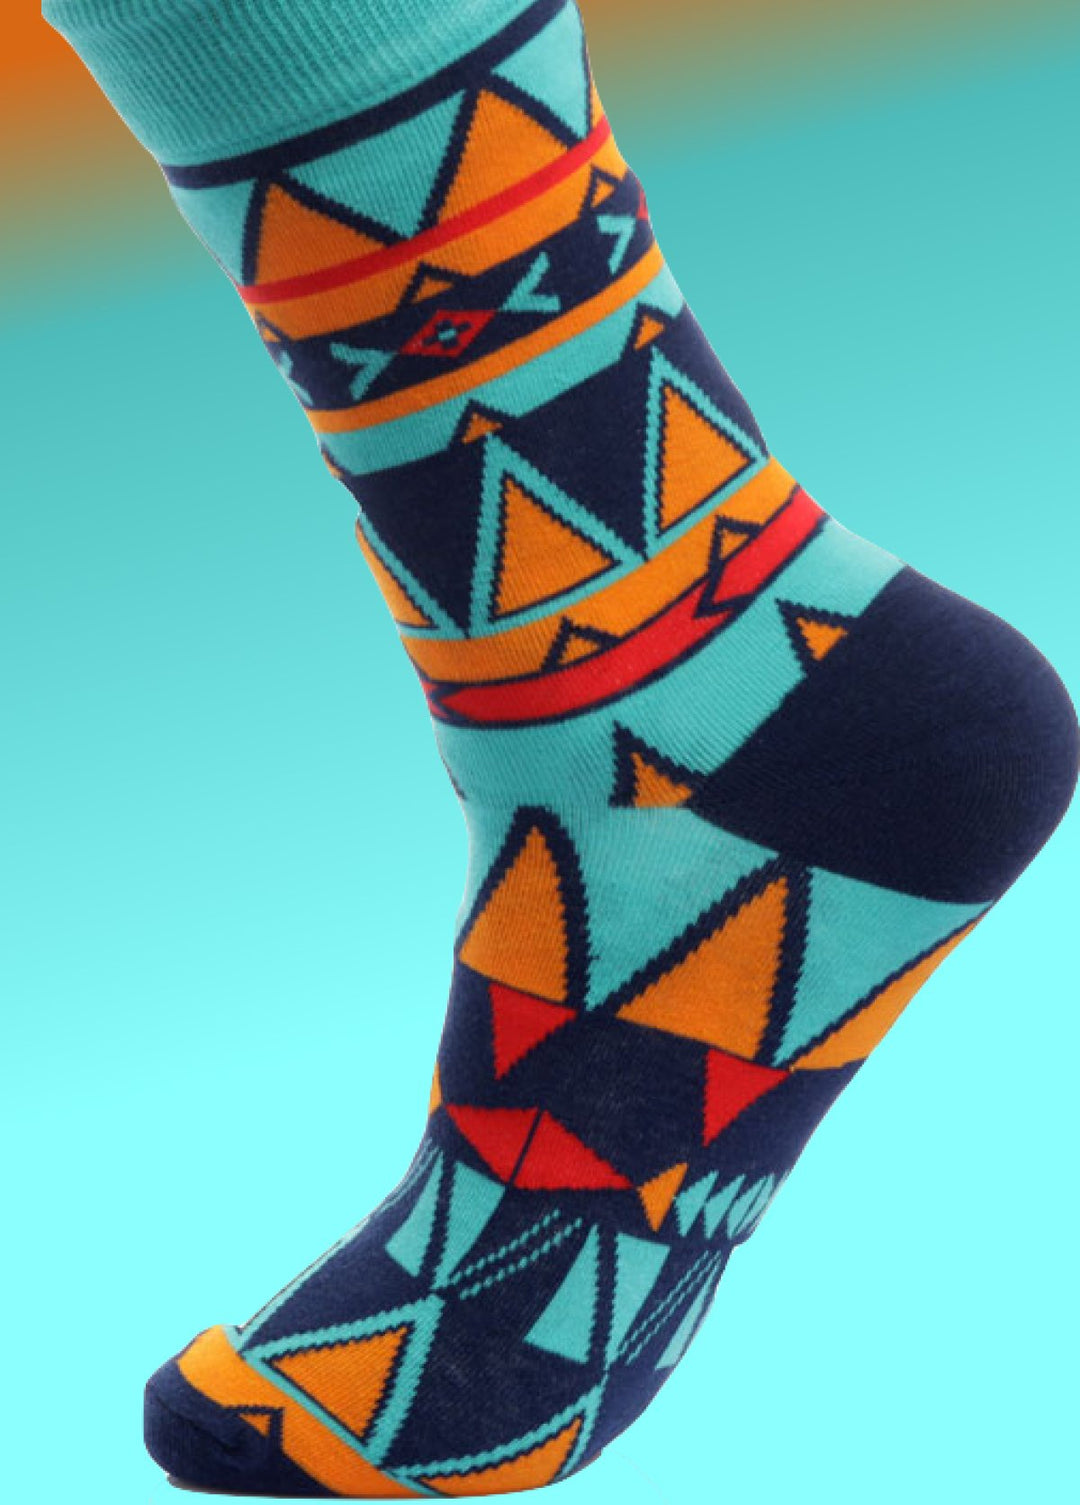 Socken aus Kenia - mikono.africa Jacken aus Kenia bunte Bomberjacke Partyjacke faire sozial nachhaltig designed in Kenia